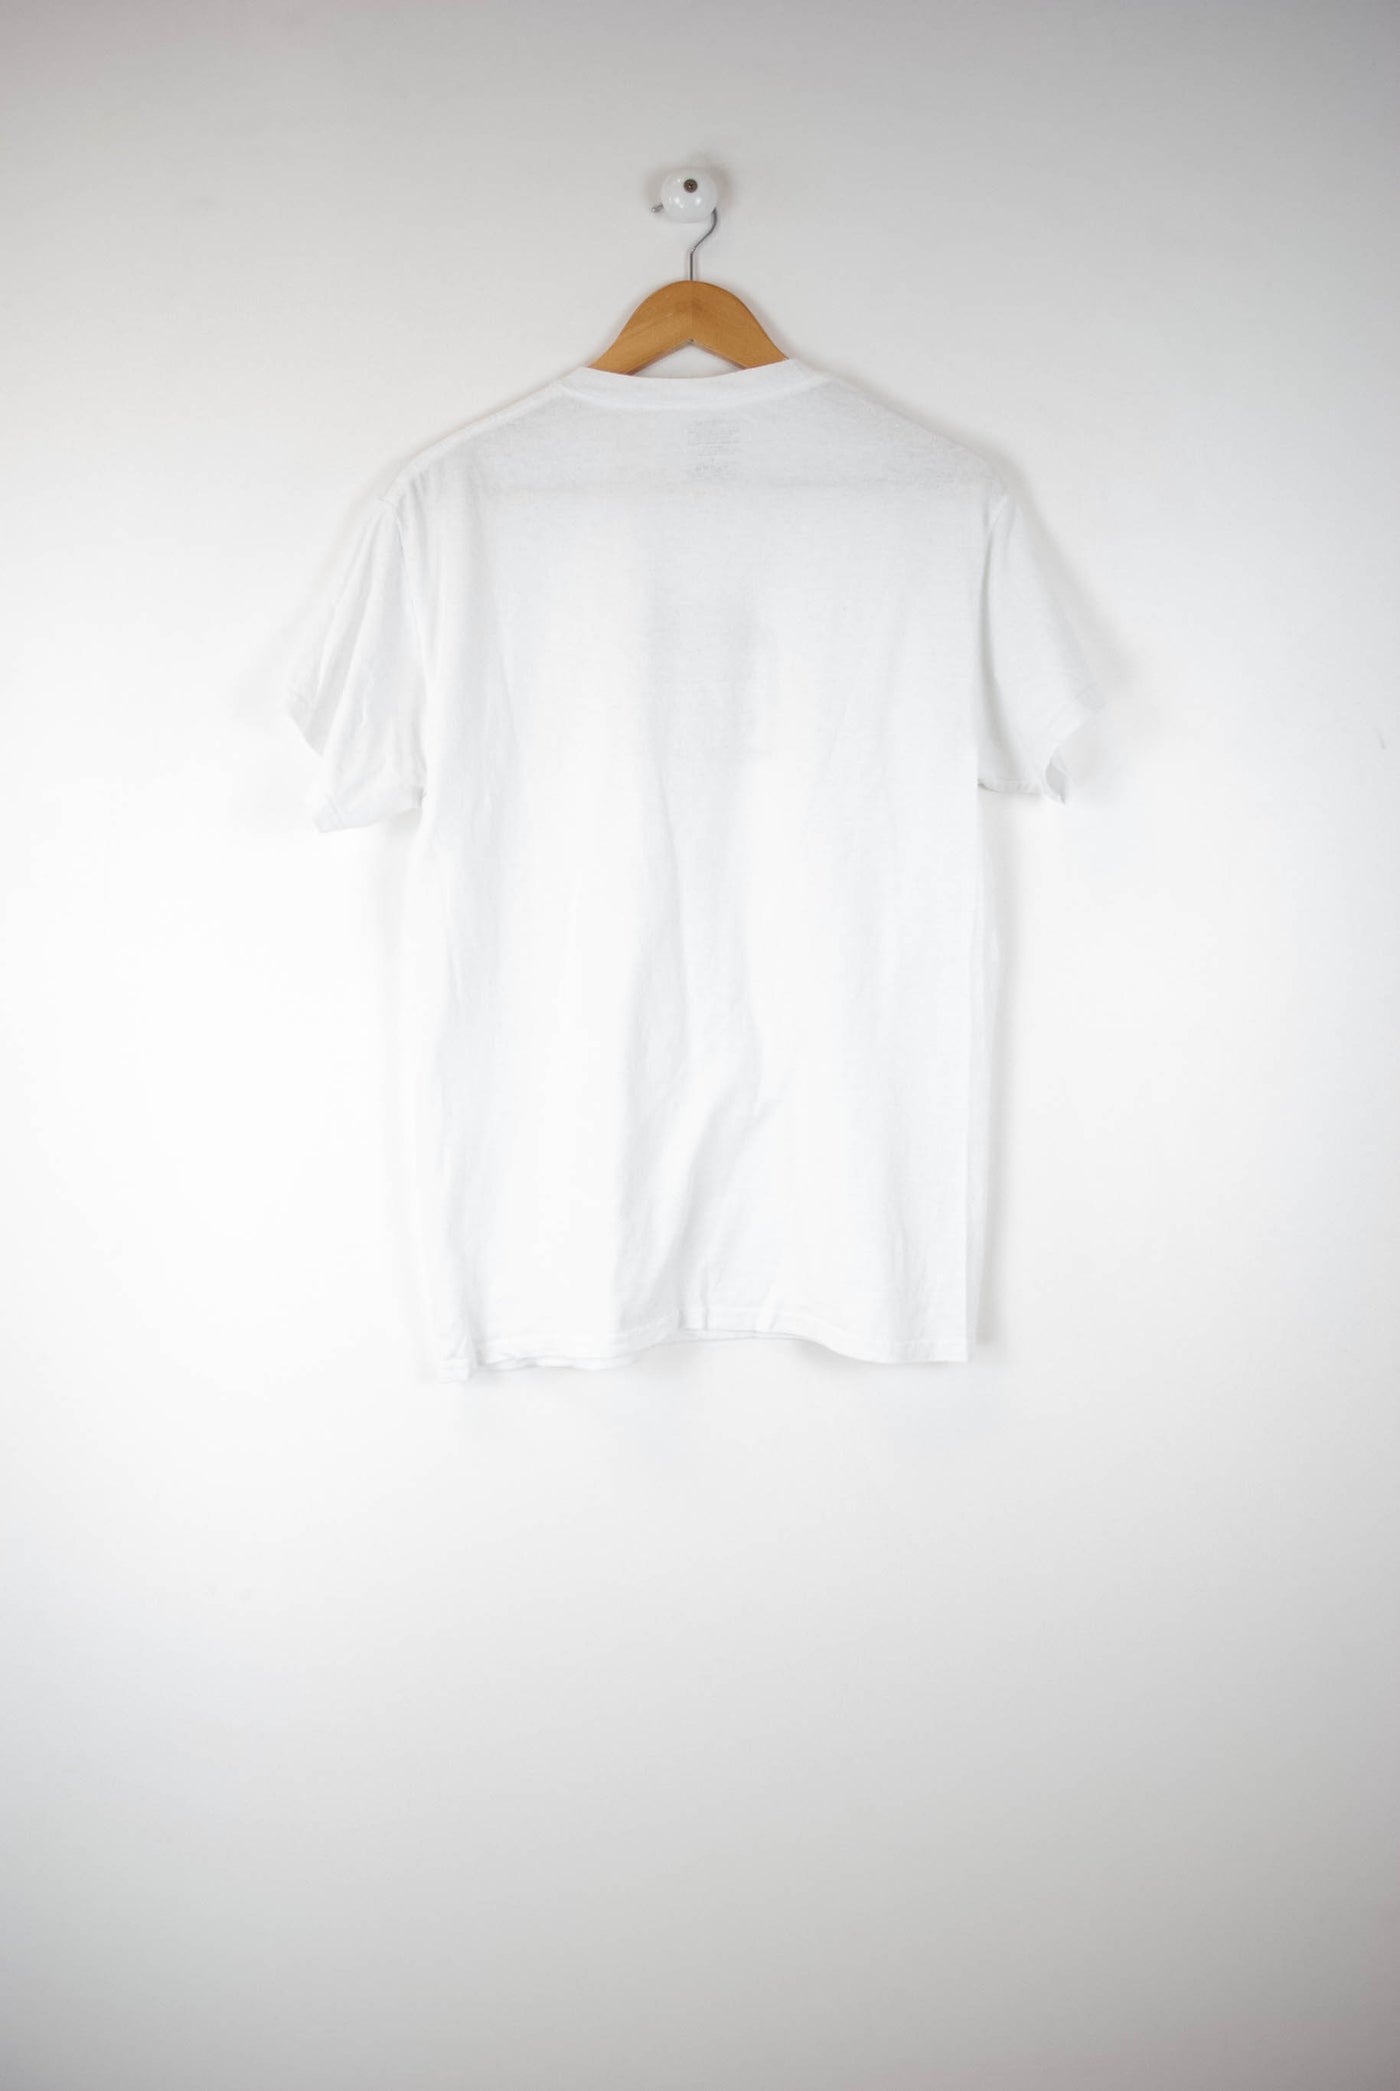 Camiseta blanca con texto